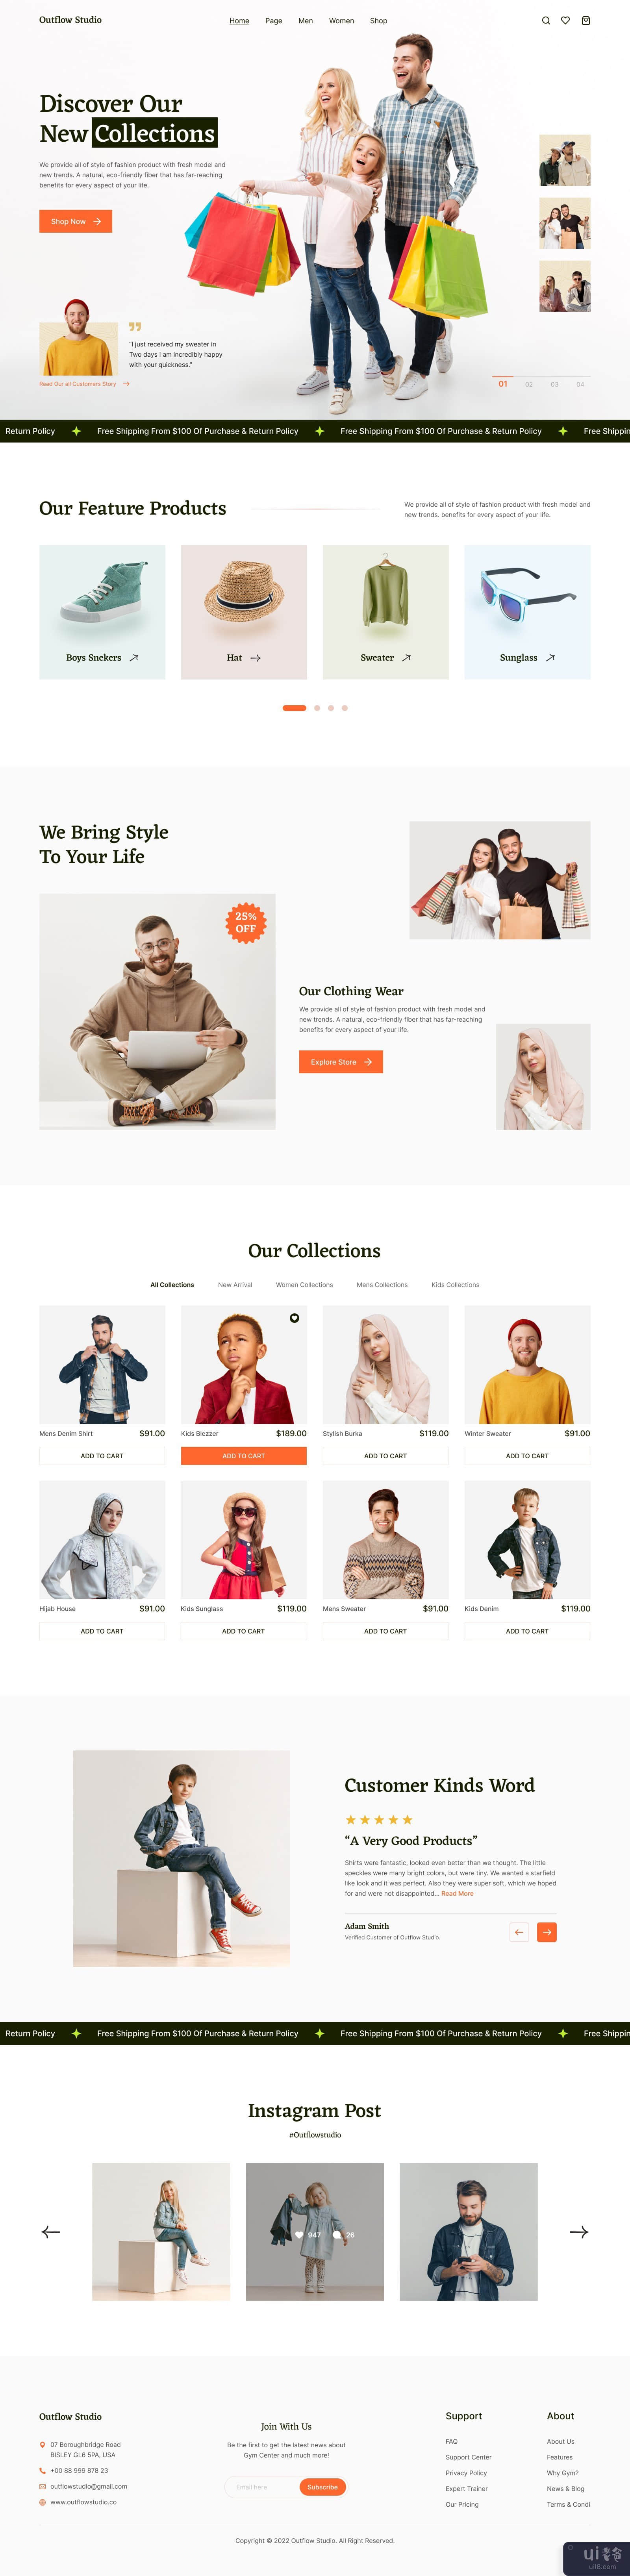 服装店网站设计理念(Clothing Store Website Design Concept)插图2